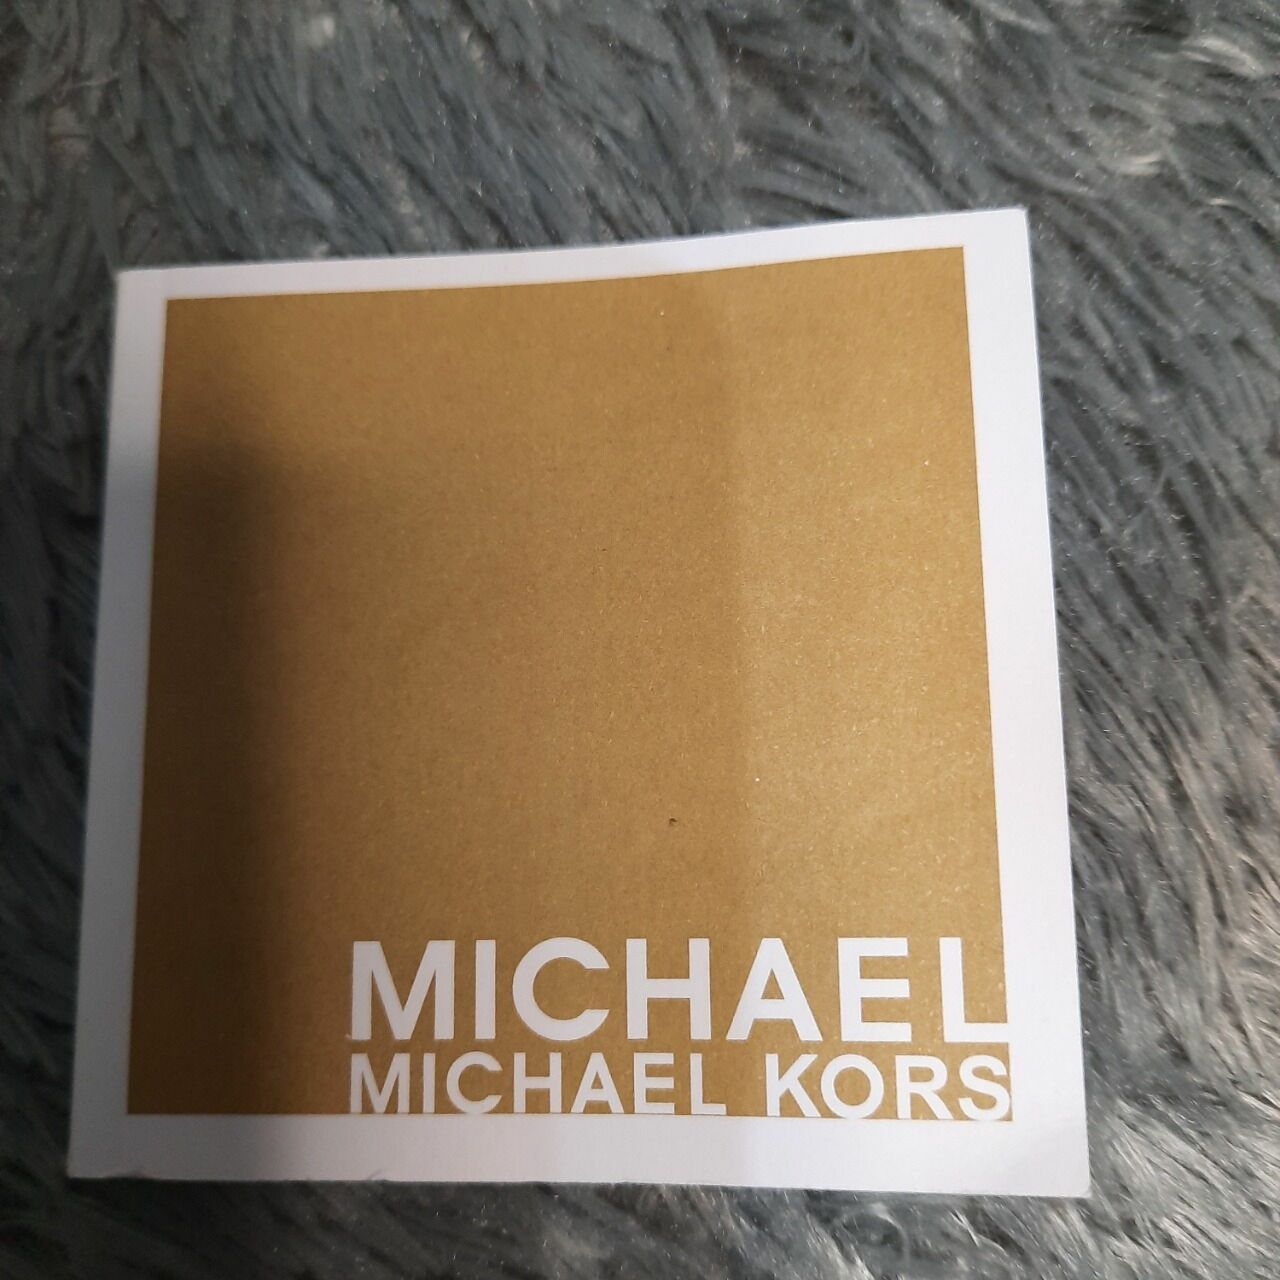 Michael Kors Black Cronograph